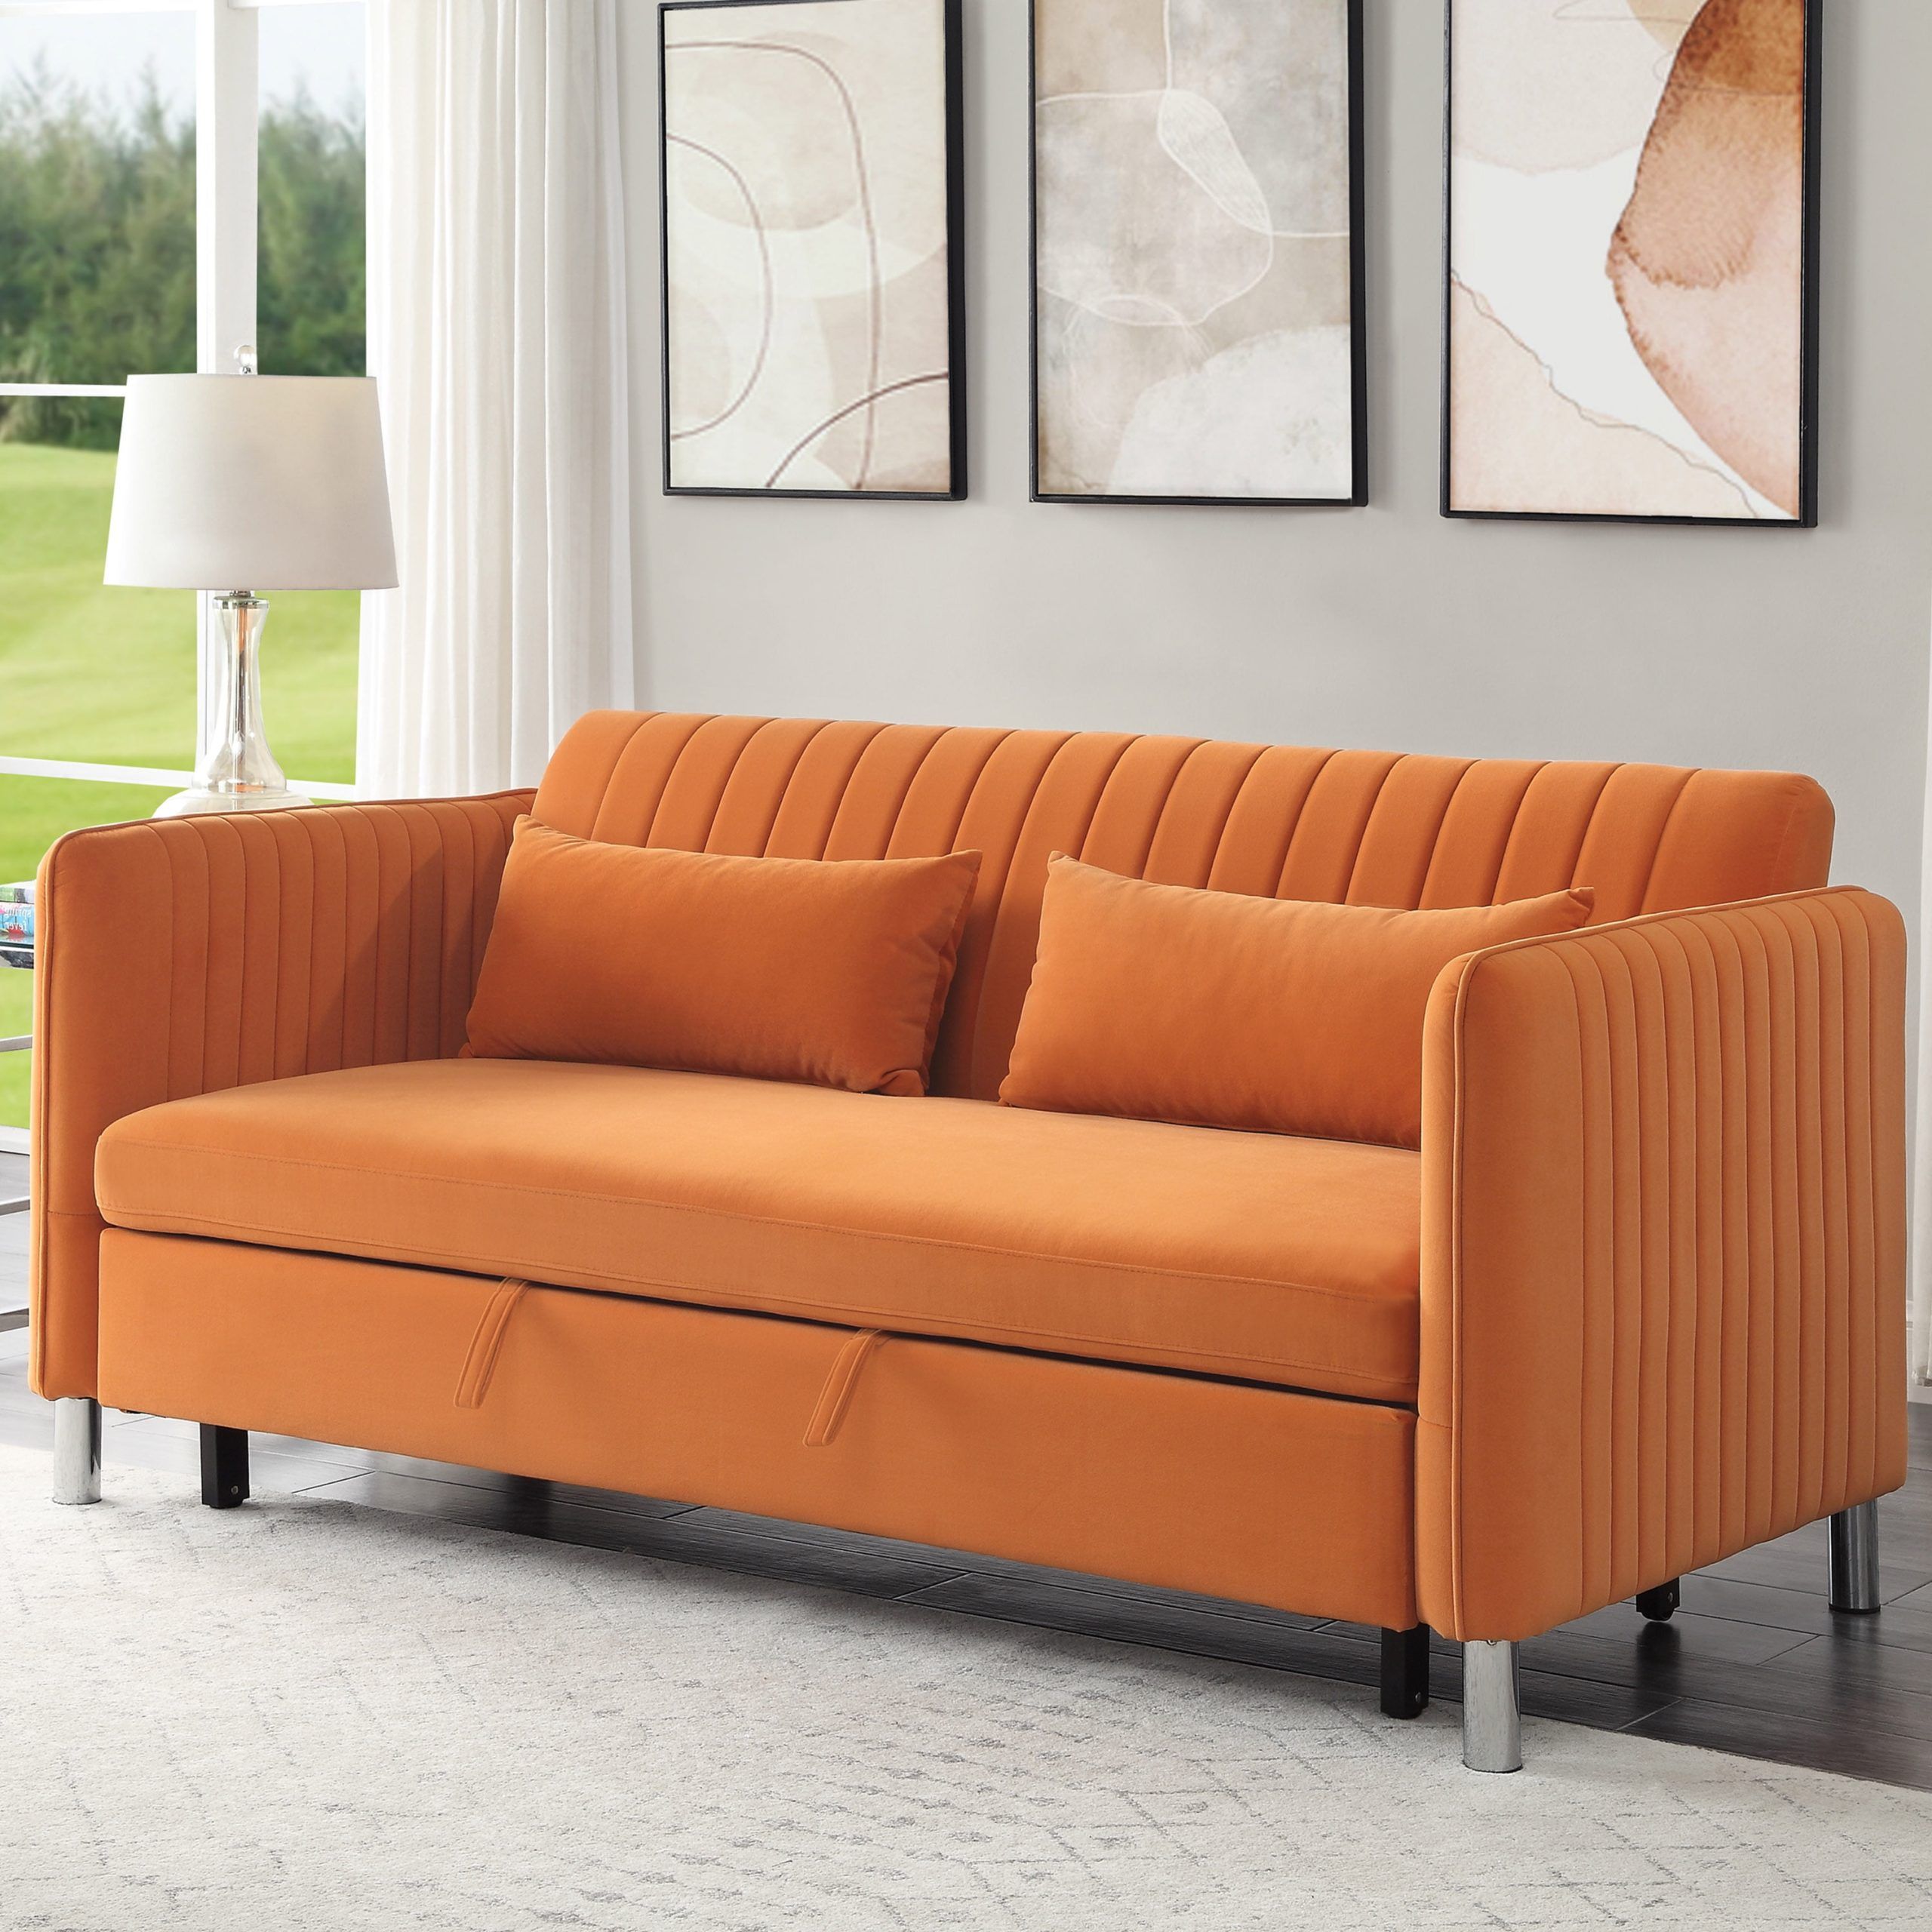 66" Convertible Velvet Sofa Beds Inside Fashionable Lexiconhome Greenway Velvet Convertible Sofa Bed, Orange – Walmart (View 5 of 15)